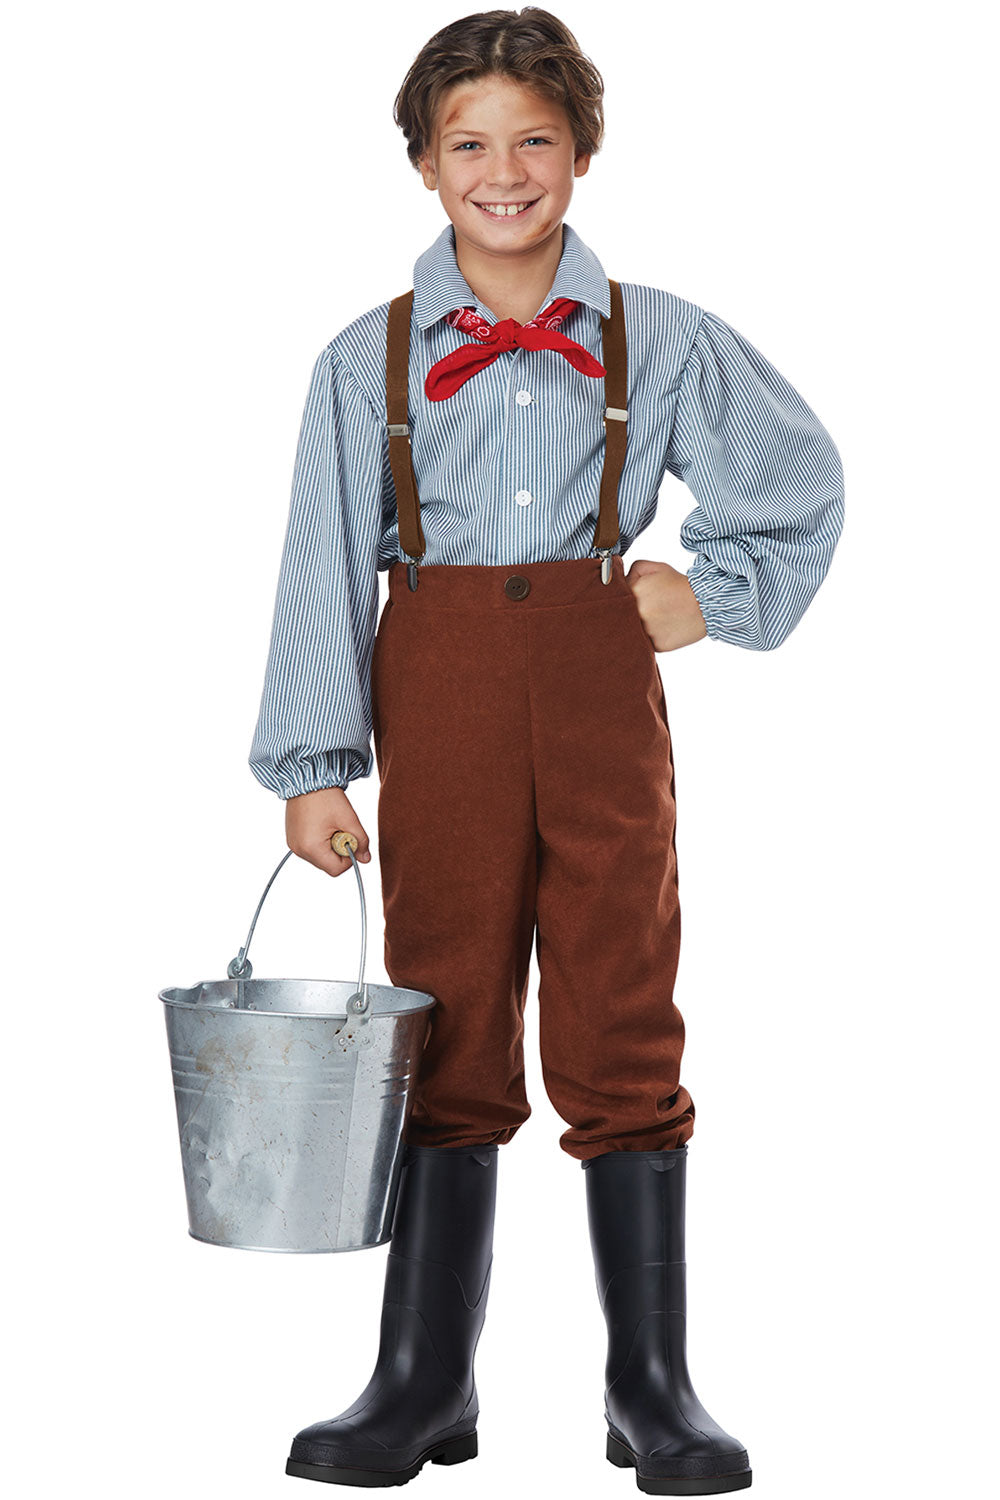 PIONEER BOY/CHILD California Costume 00591